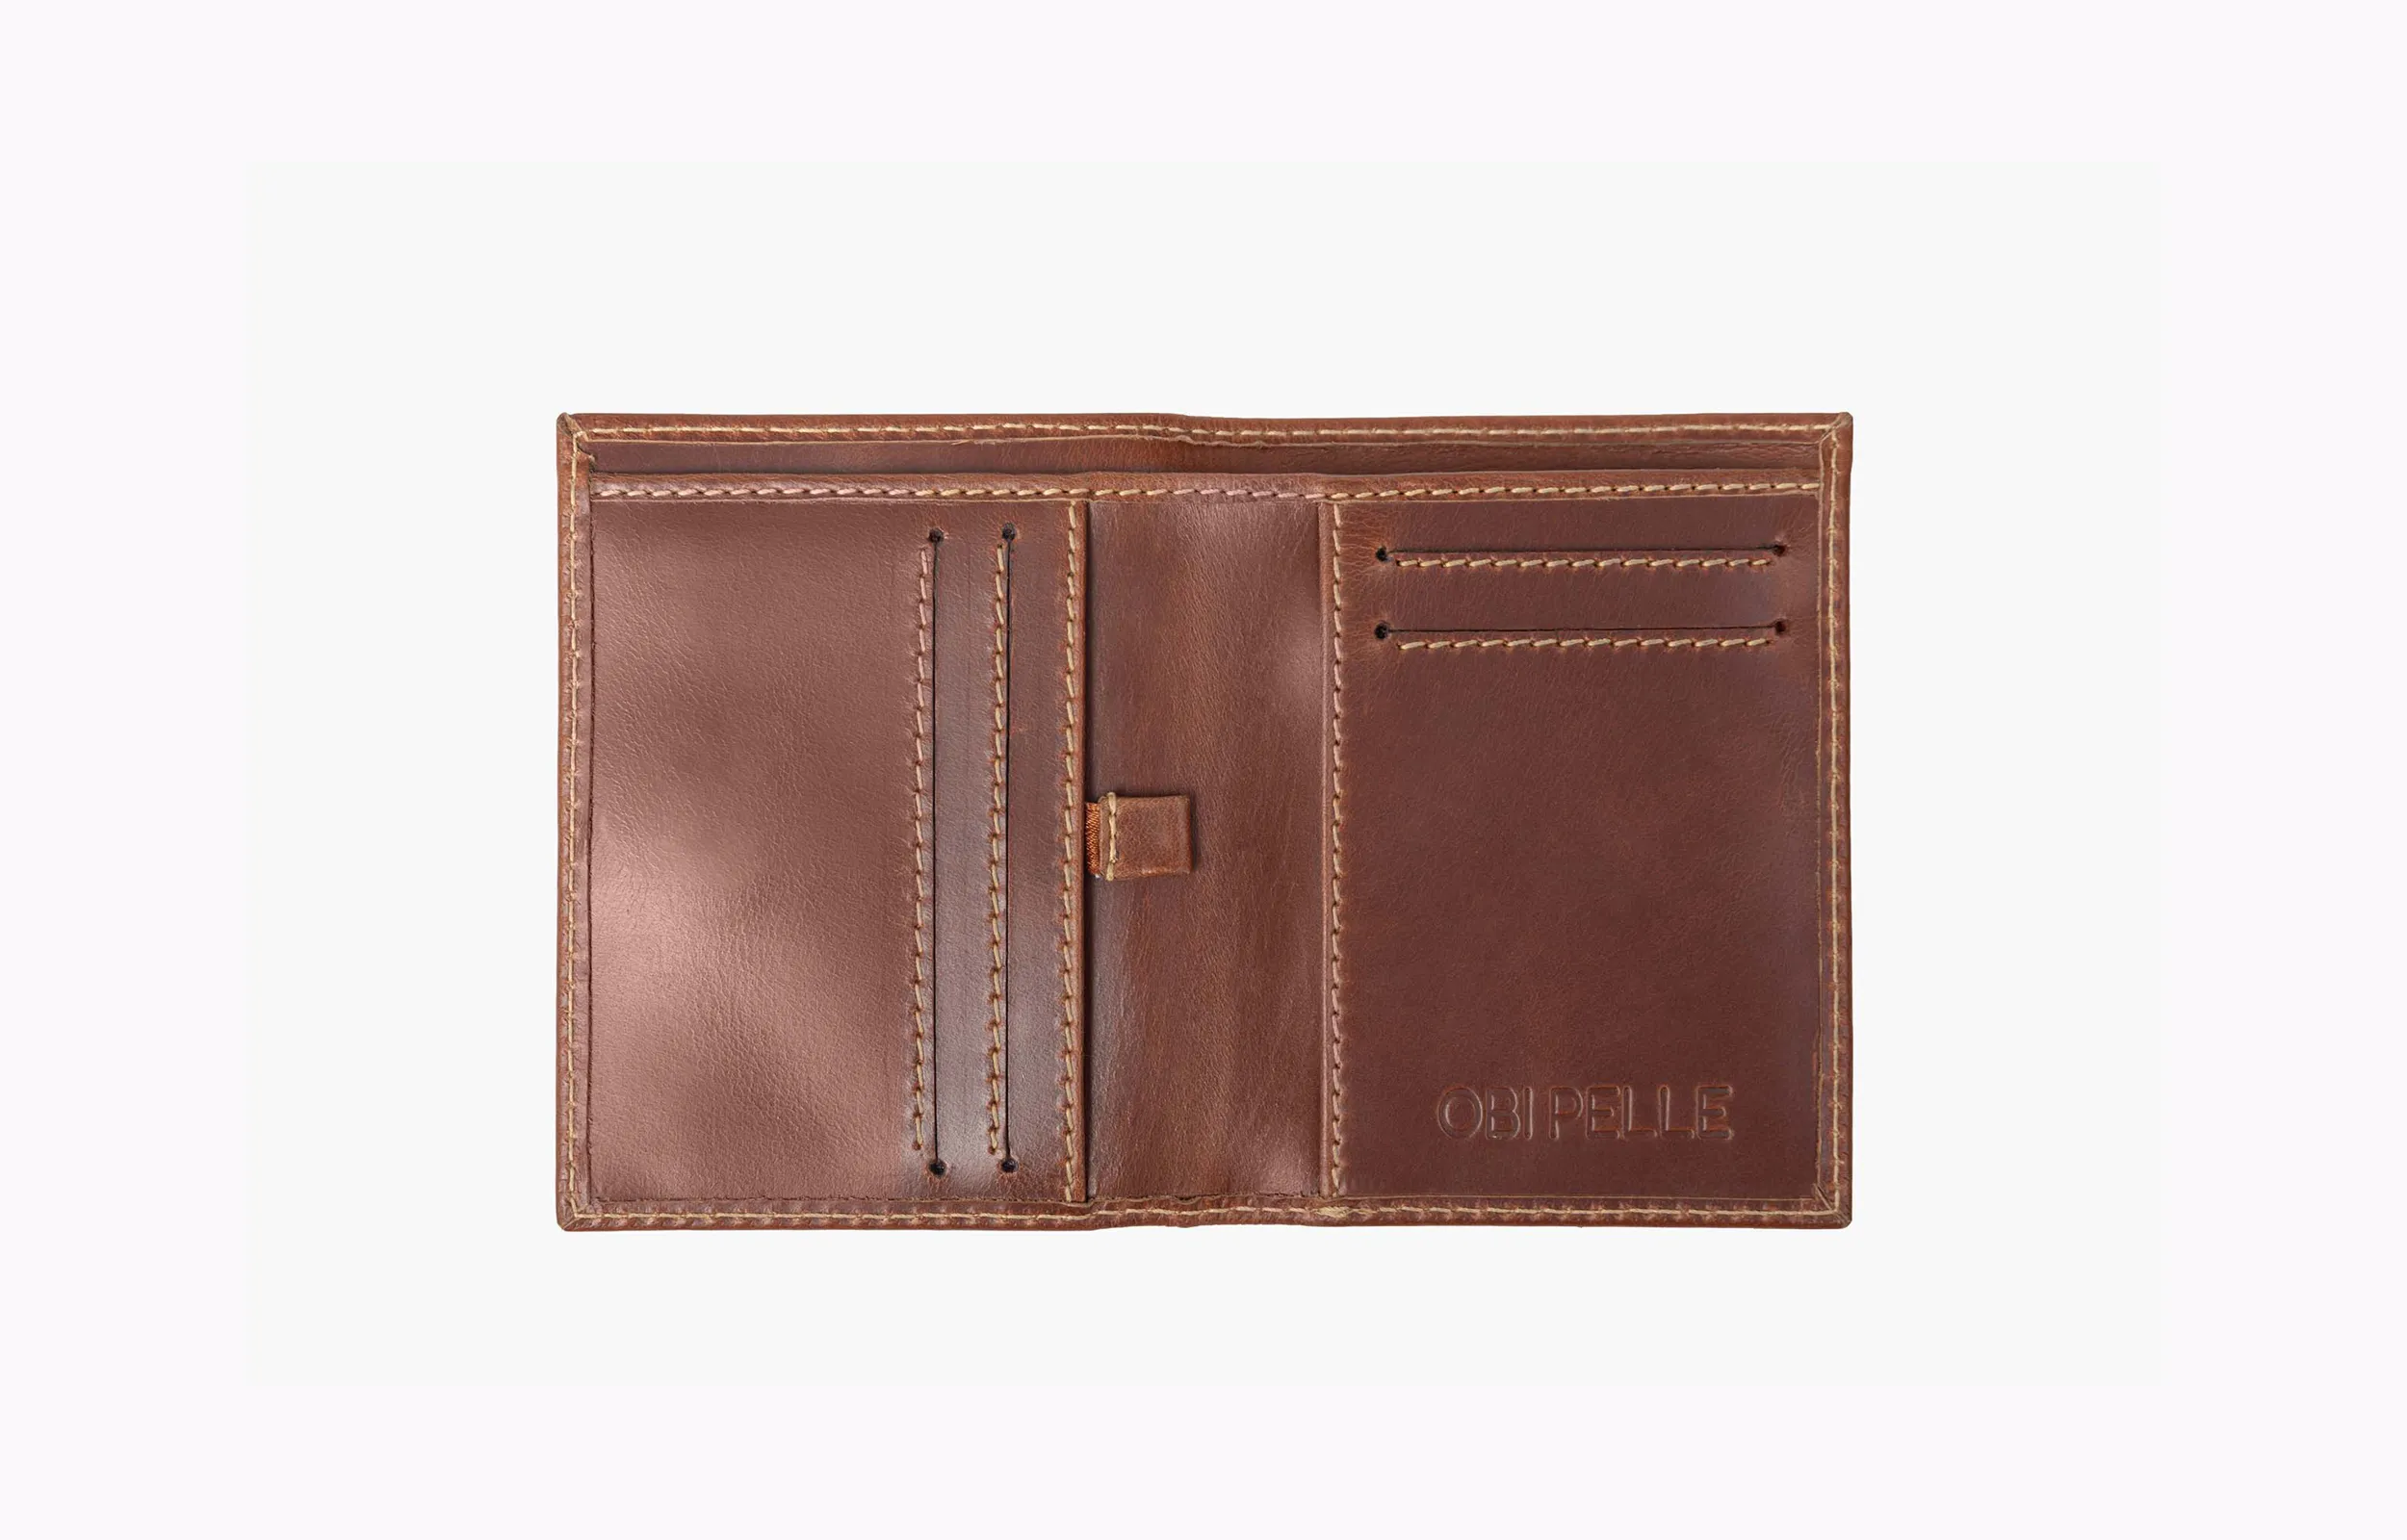 Rio Geneva Brown Leather Card Holder UK 3